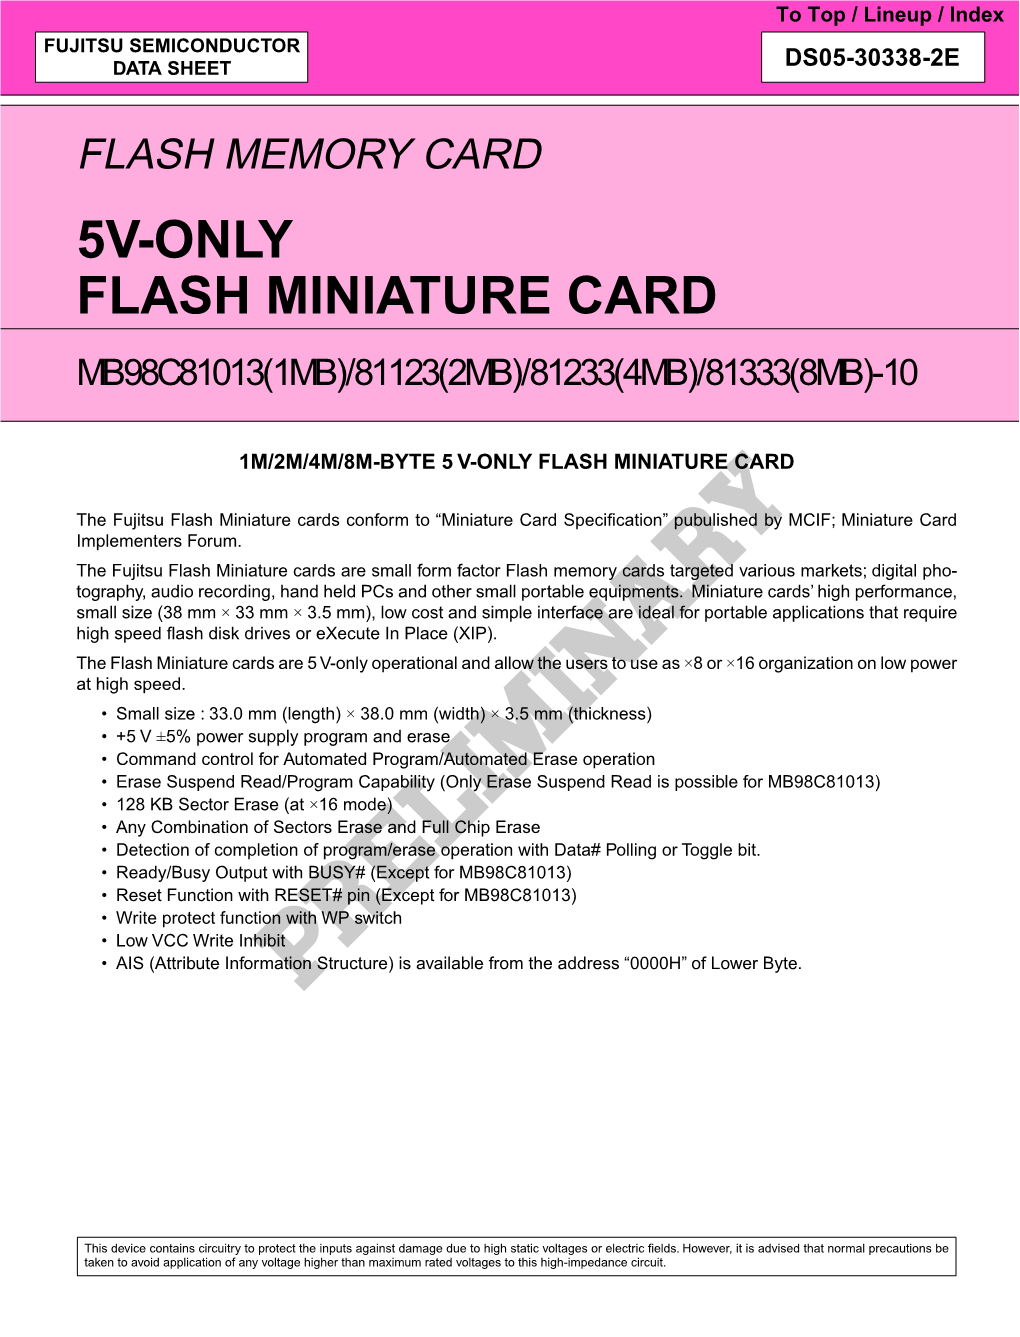 5V-Only Flash Miniature Card Mb98c81013(1Mb)/81123(2Mb)/81233(4Mb)/81333(8Mb)-10